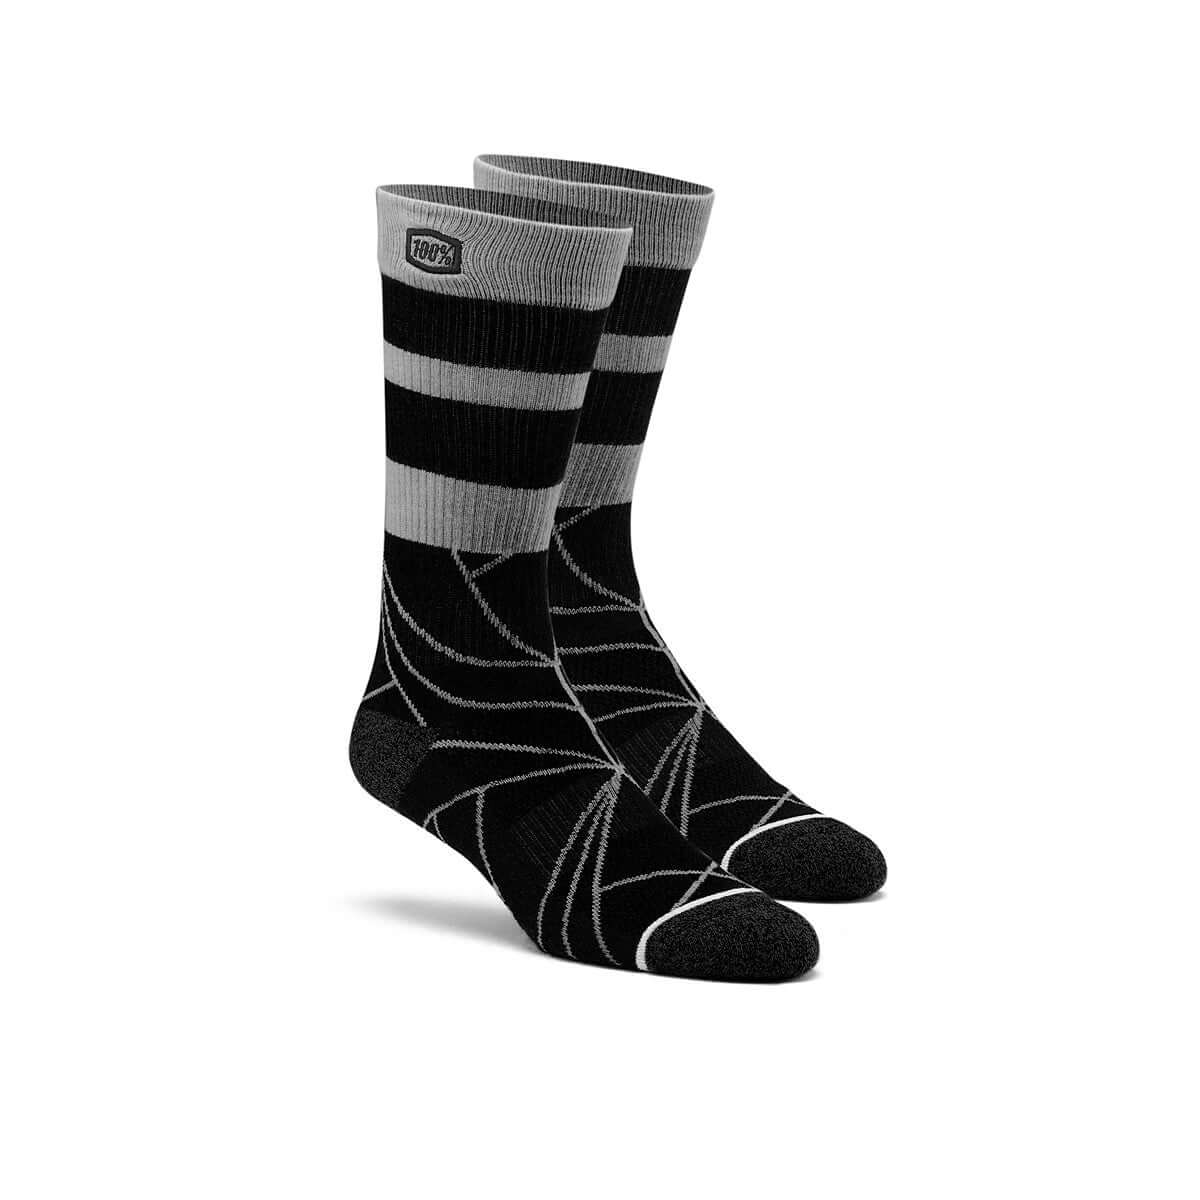 100% Fracture Athletic Socks Black S\M Bike Socks